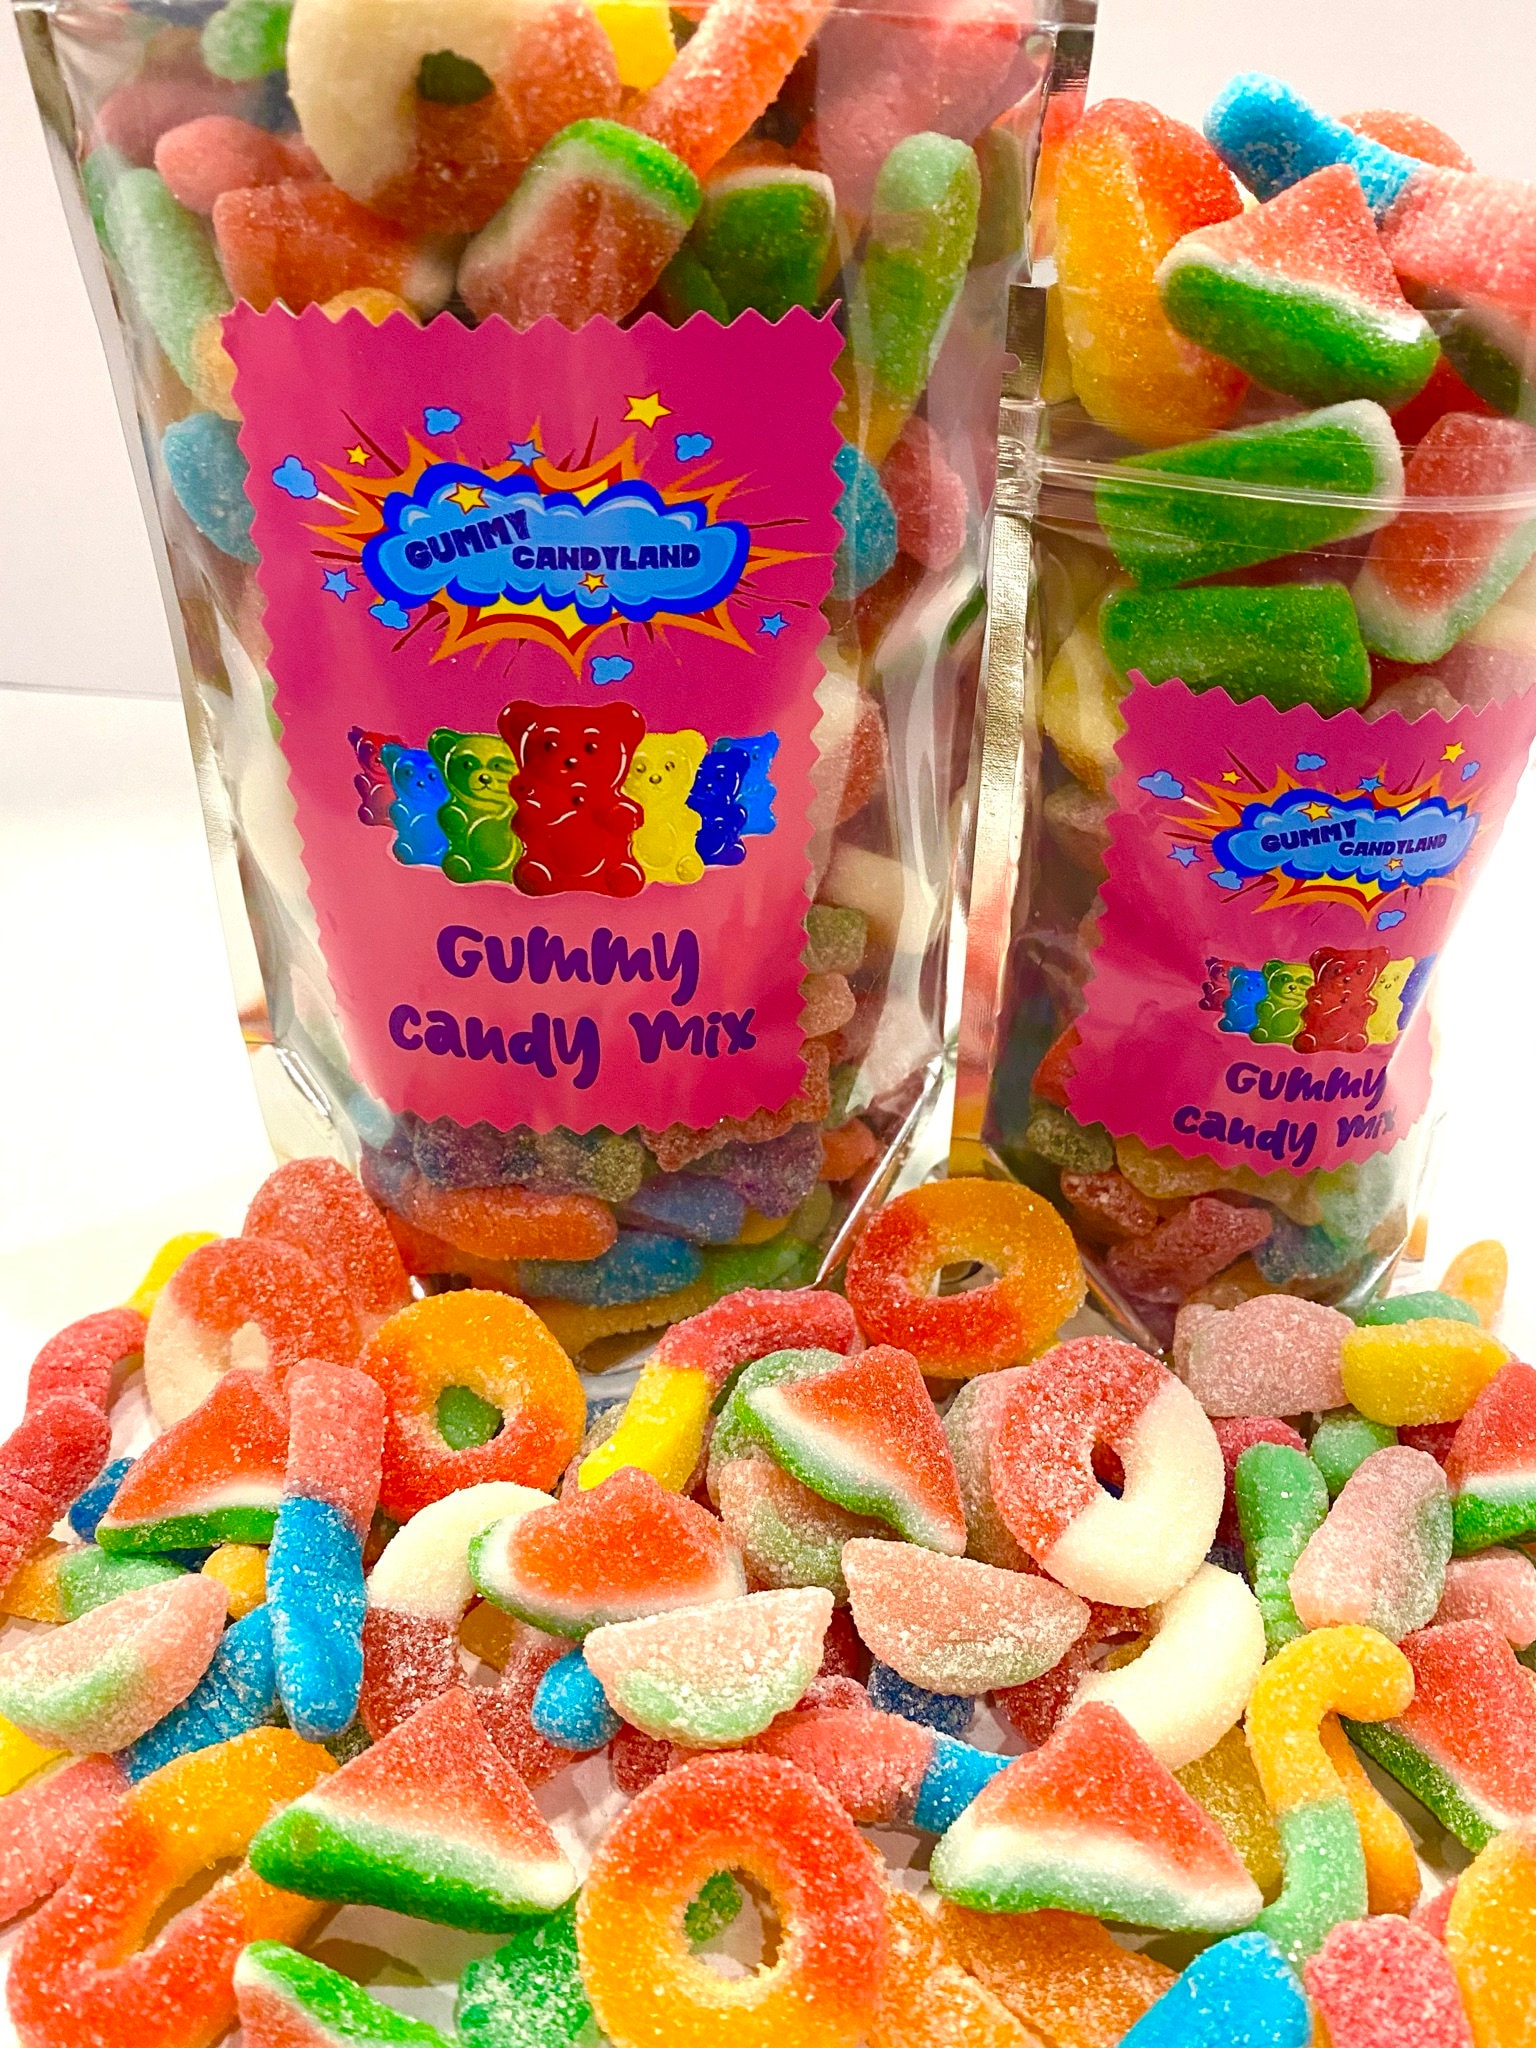 LĒVO Gummy Candy Mixer, Gummy Mold, & Tropical Peach Mix